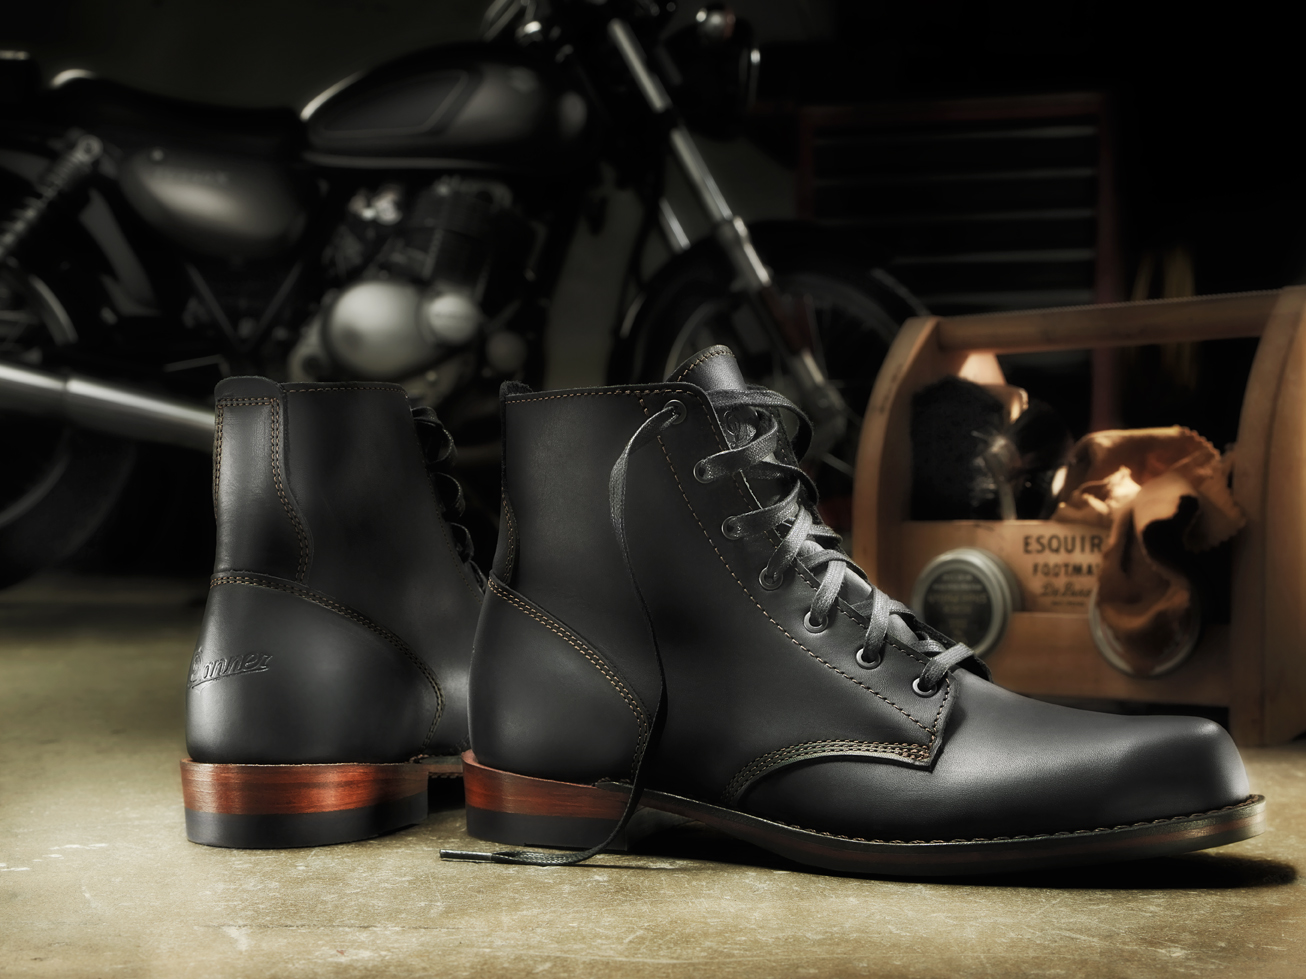 Men's Danner Williams Boots shoe photography shot by Studio 3